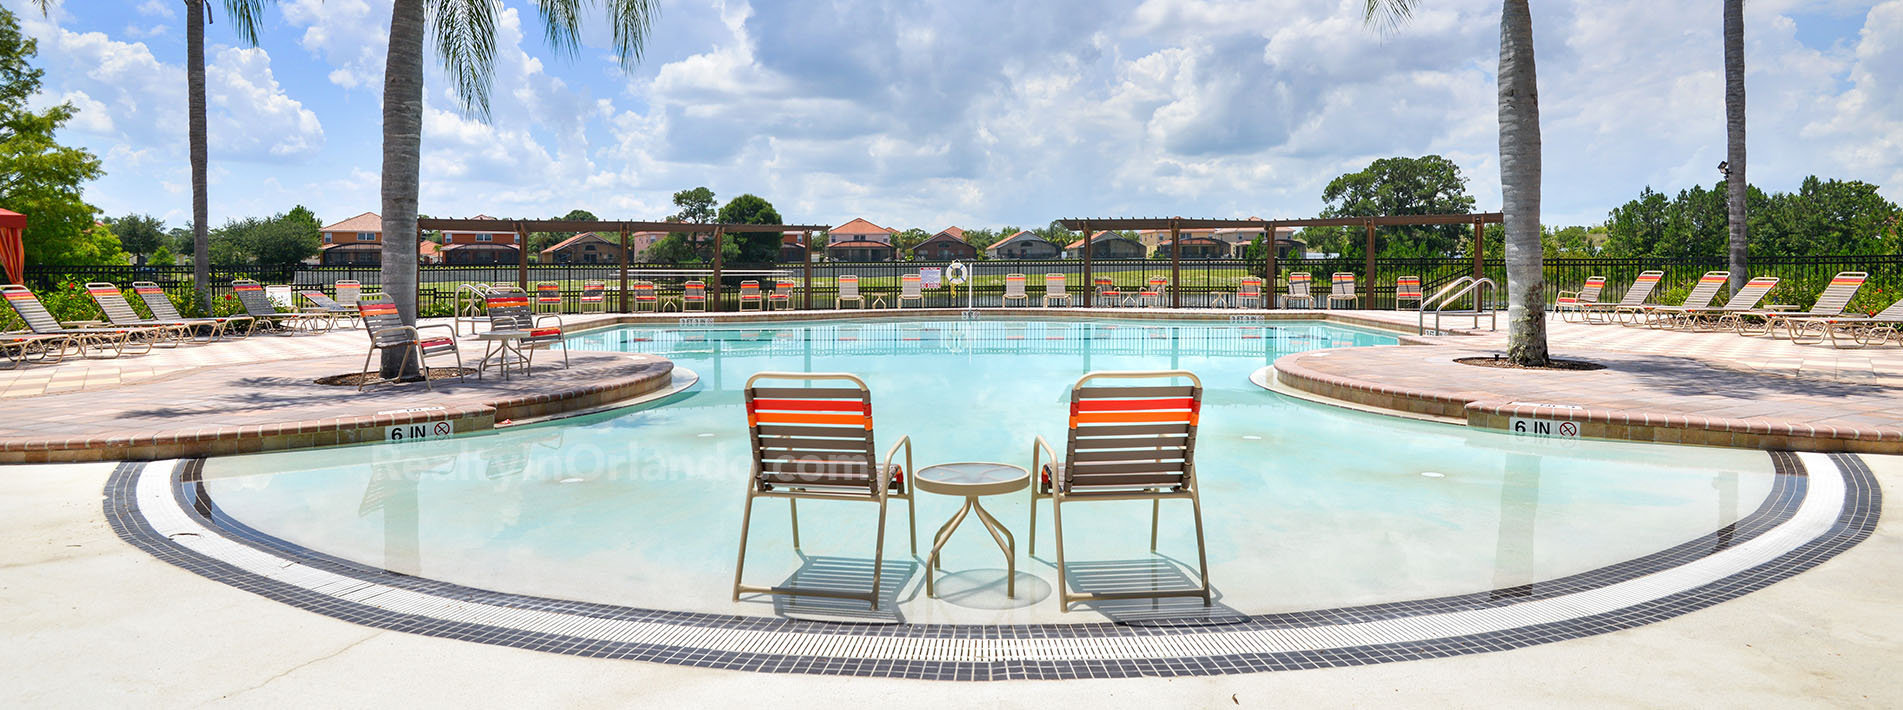 Aviana Resort Orlando Pool